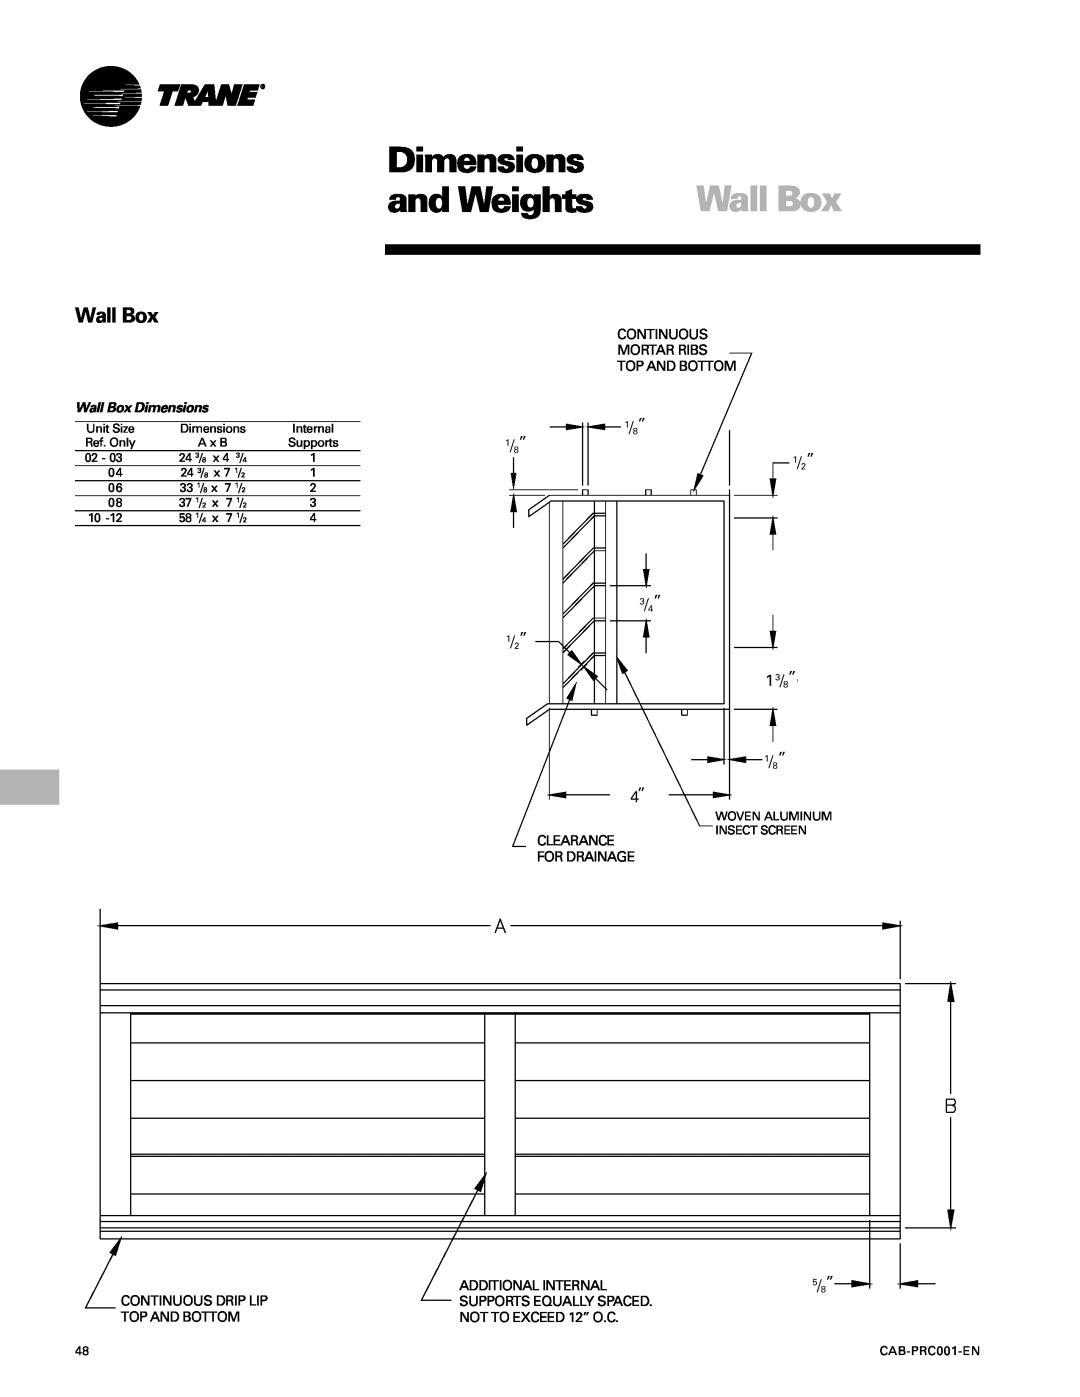 Trane CAB-PRC001-EN manual and Weights, Wall Box Dimensions 